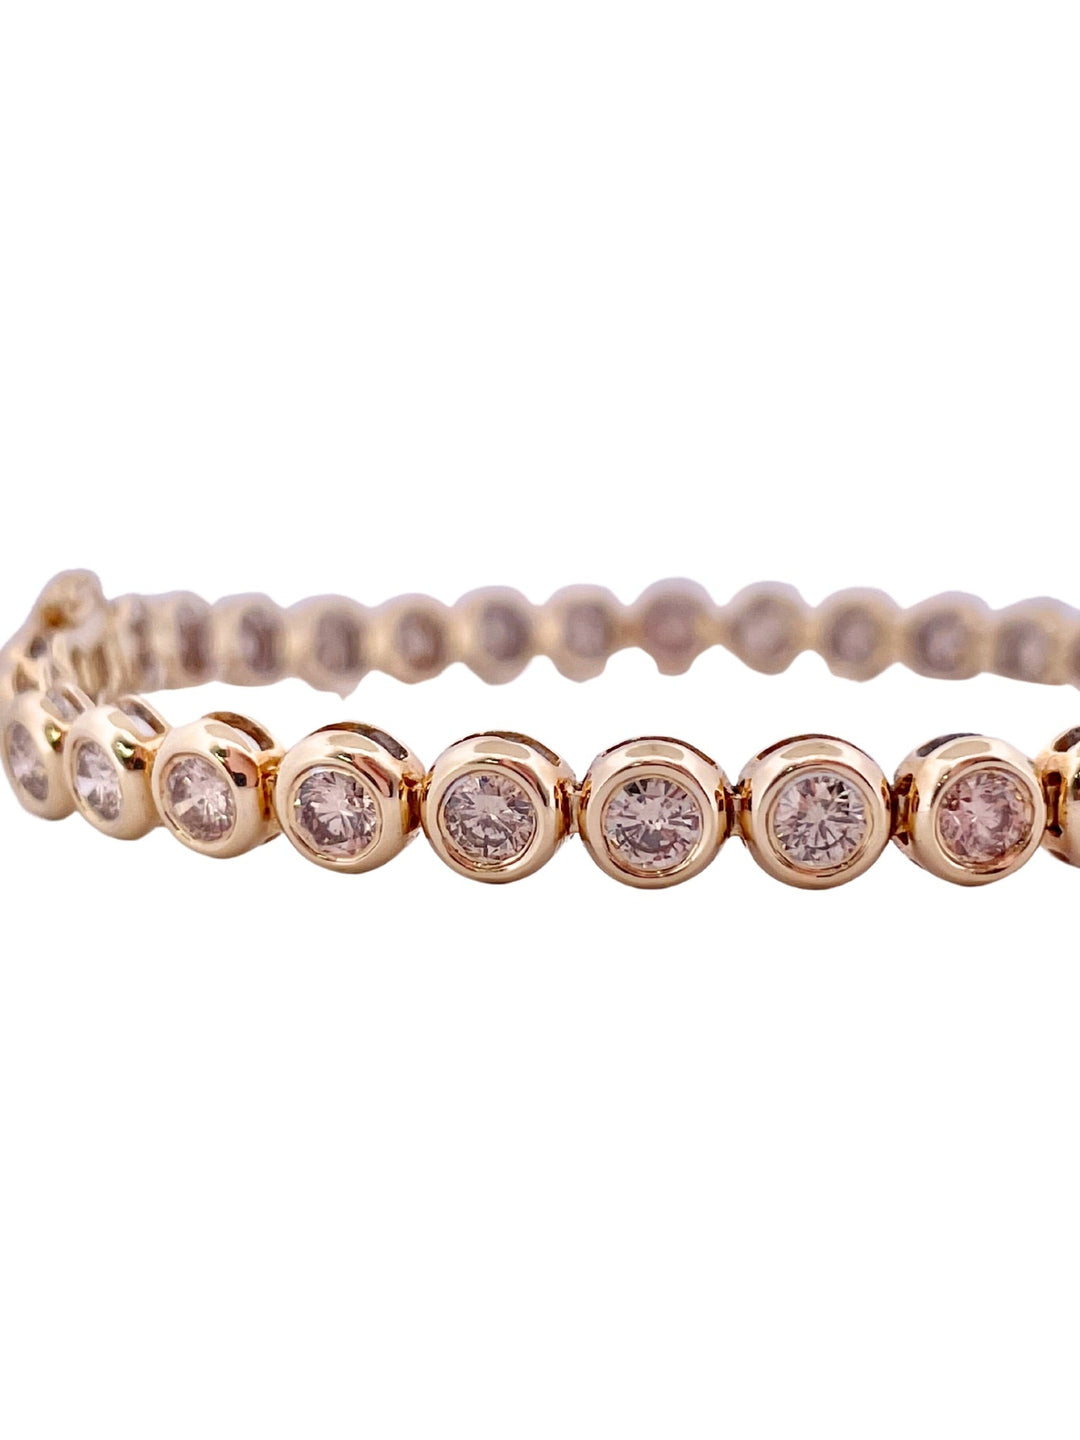 5 Carats Total Weight Diamond Bezel Set 14k Yellow Gold Tennis Bracelet - Elite Fine Jewelers